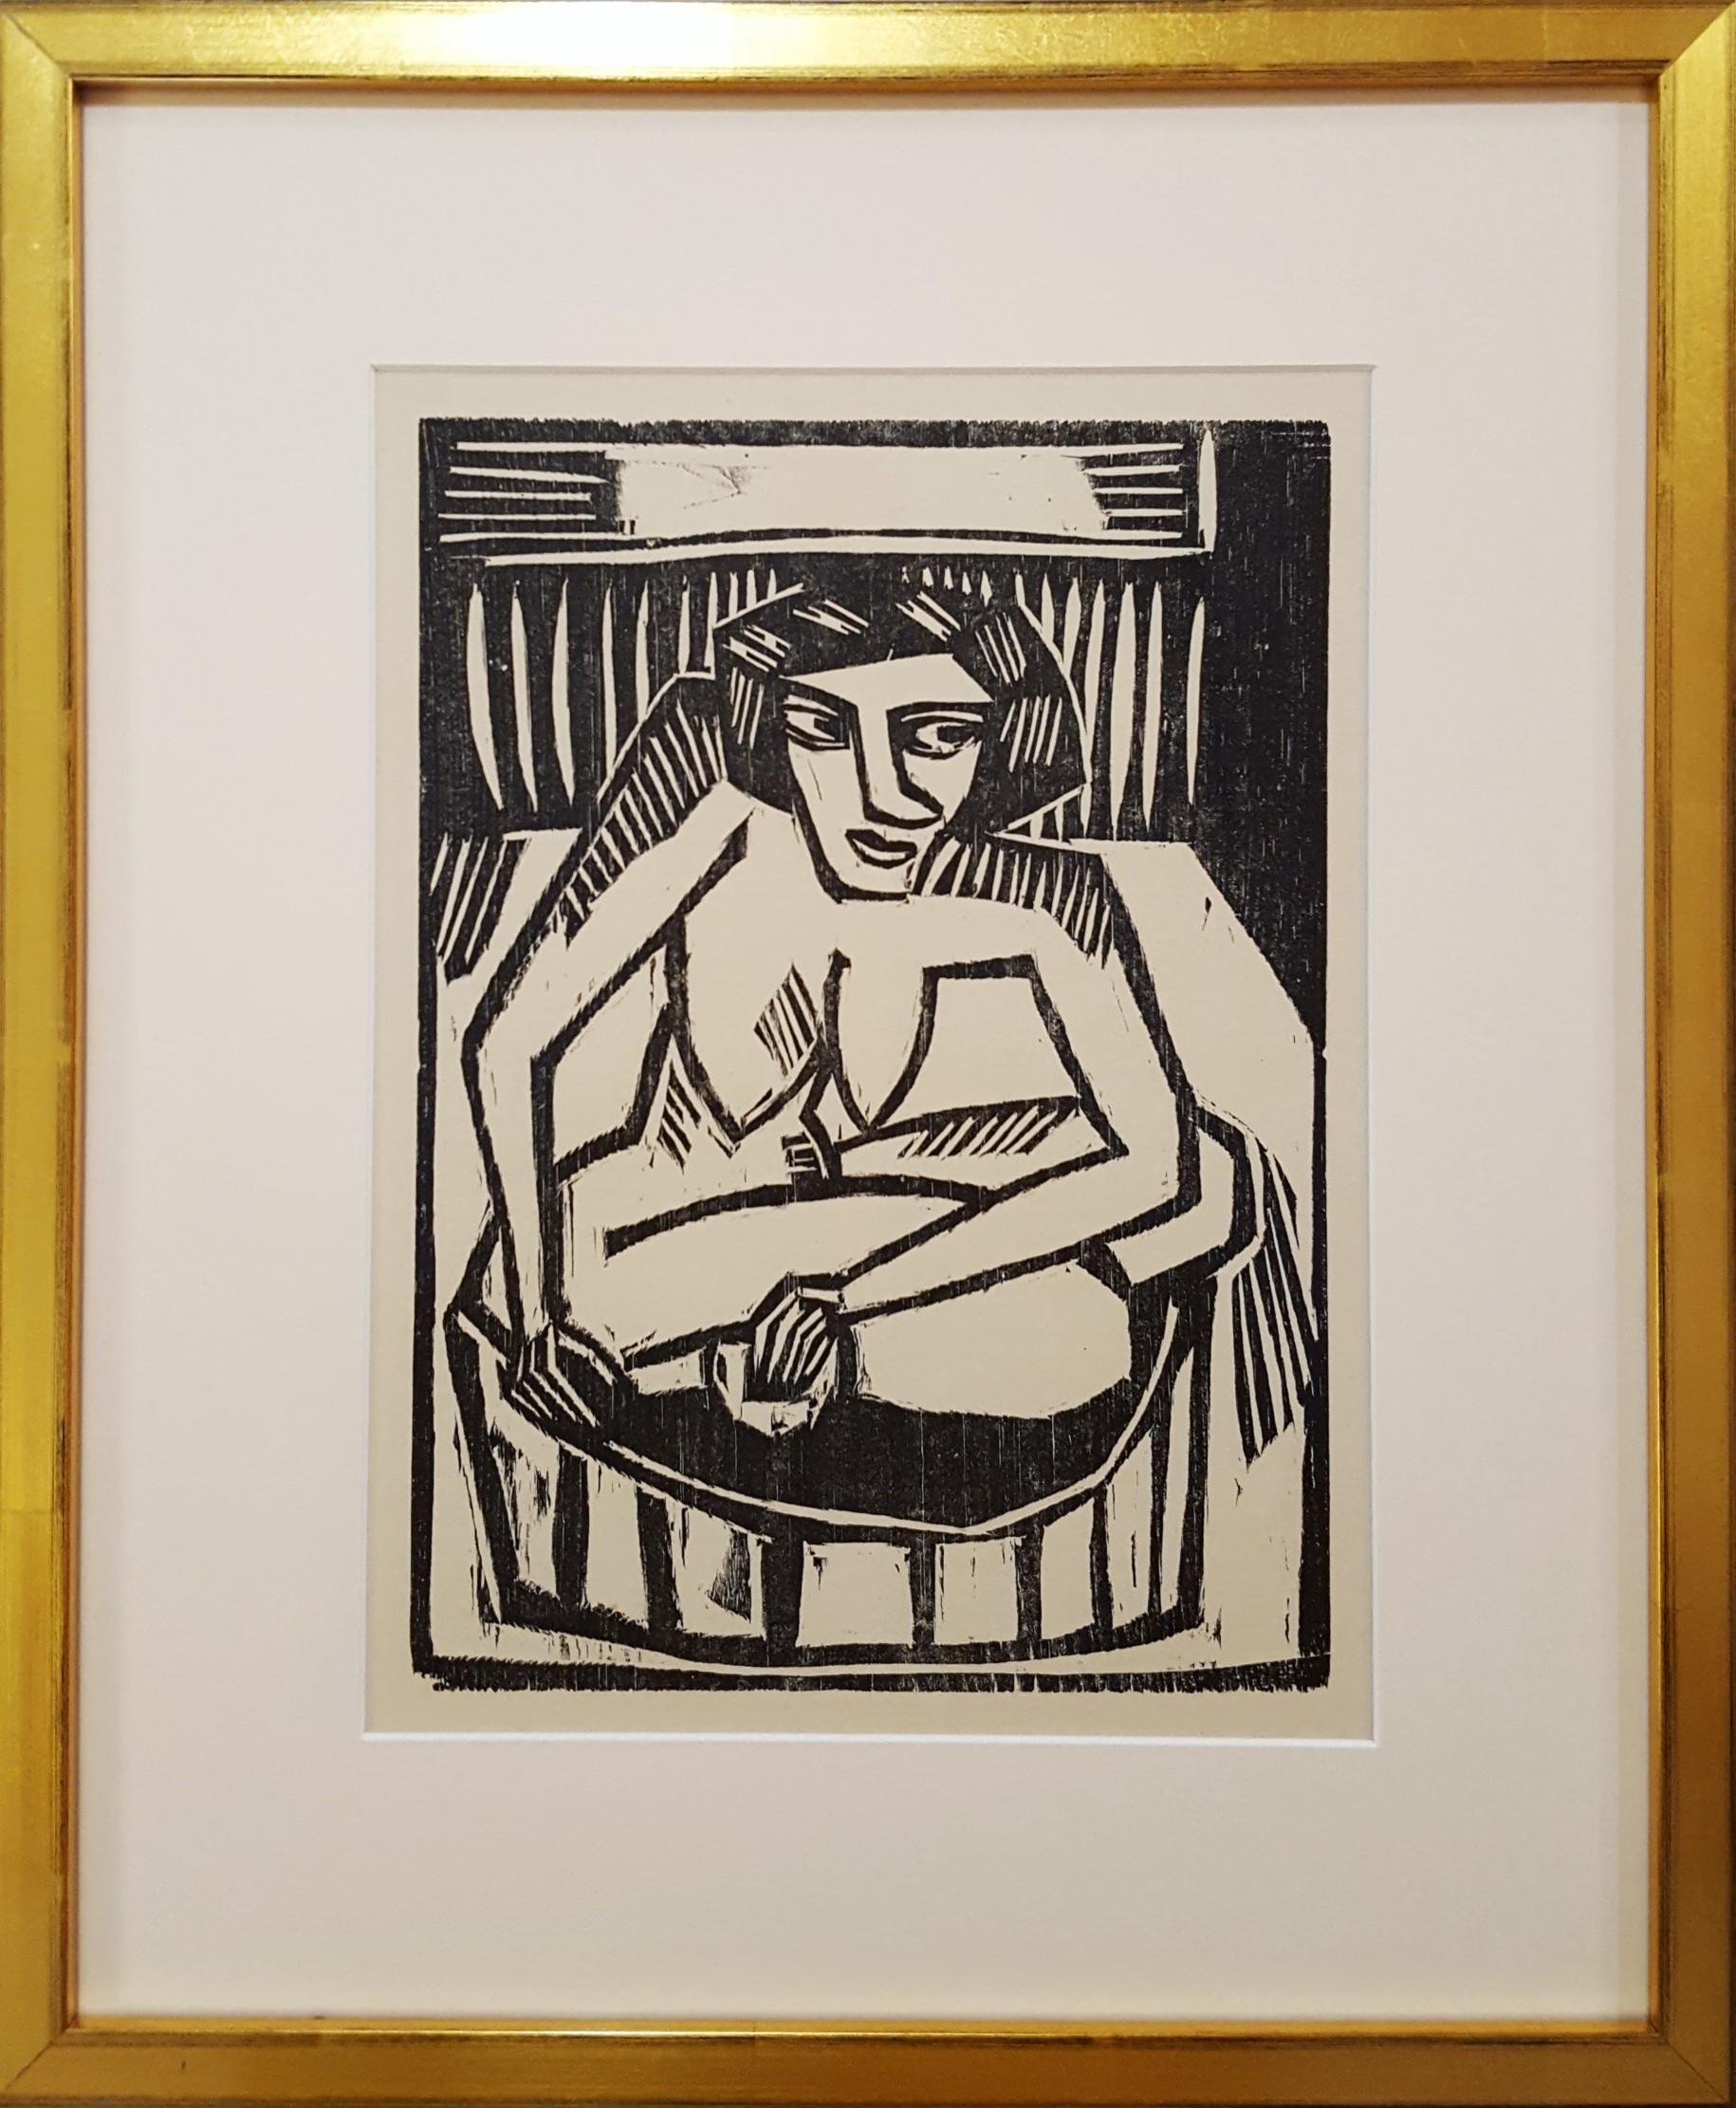 Frau in der Wanne (Woman in Tub) /// Expressionnisme allemand Schmidt-Rottluff nu  - Print de Karl Schmidt-Rottluff